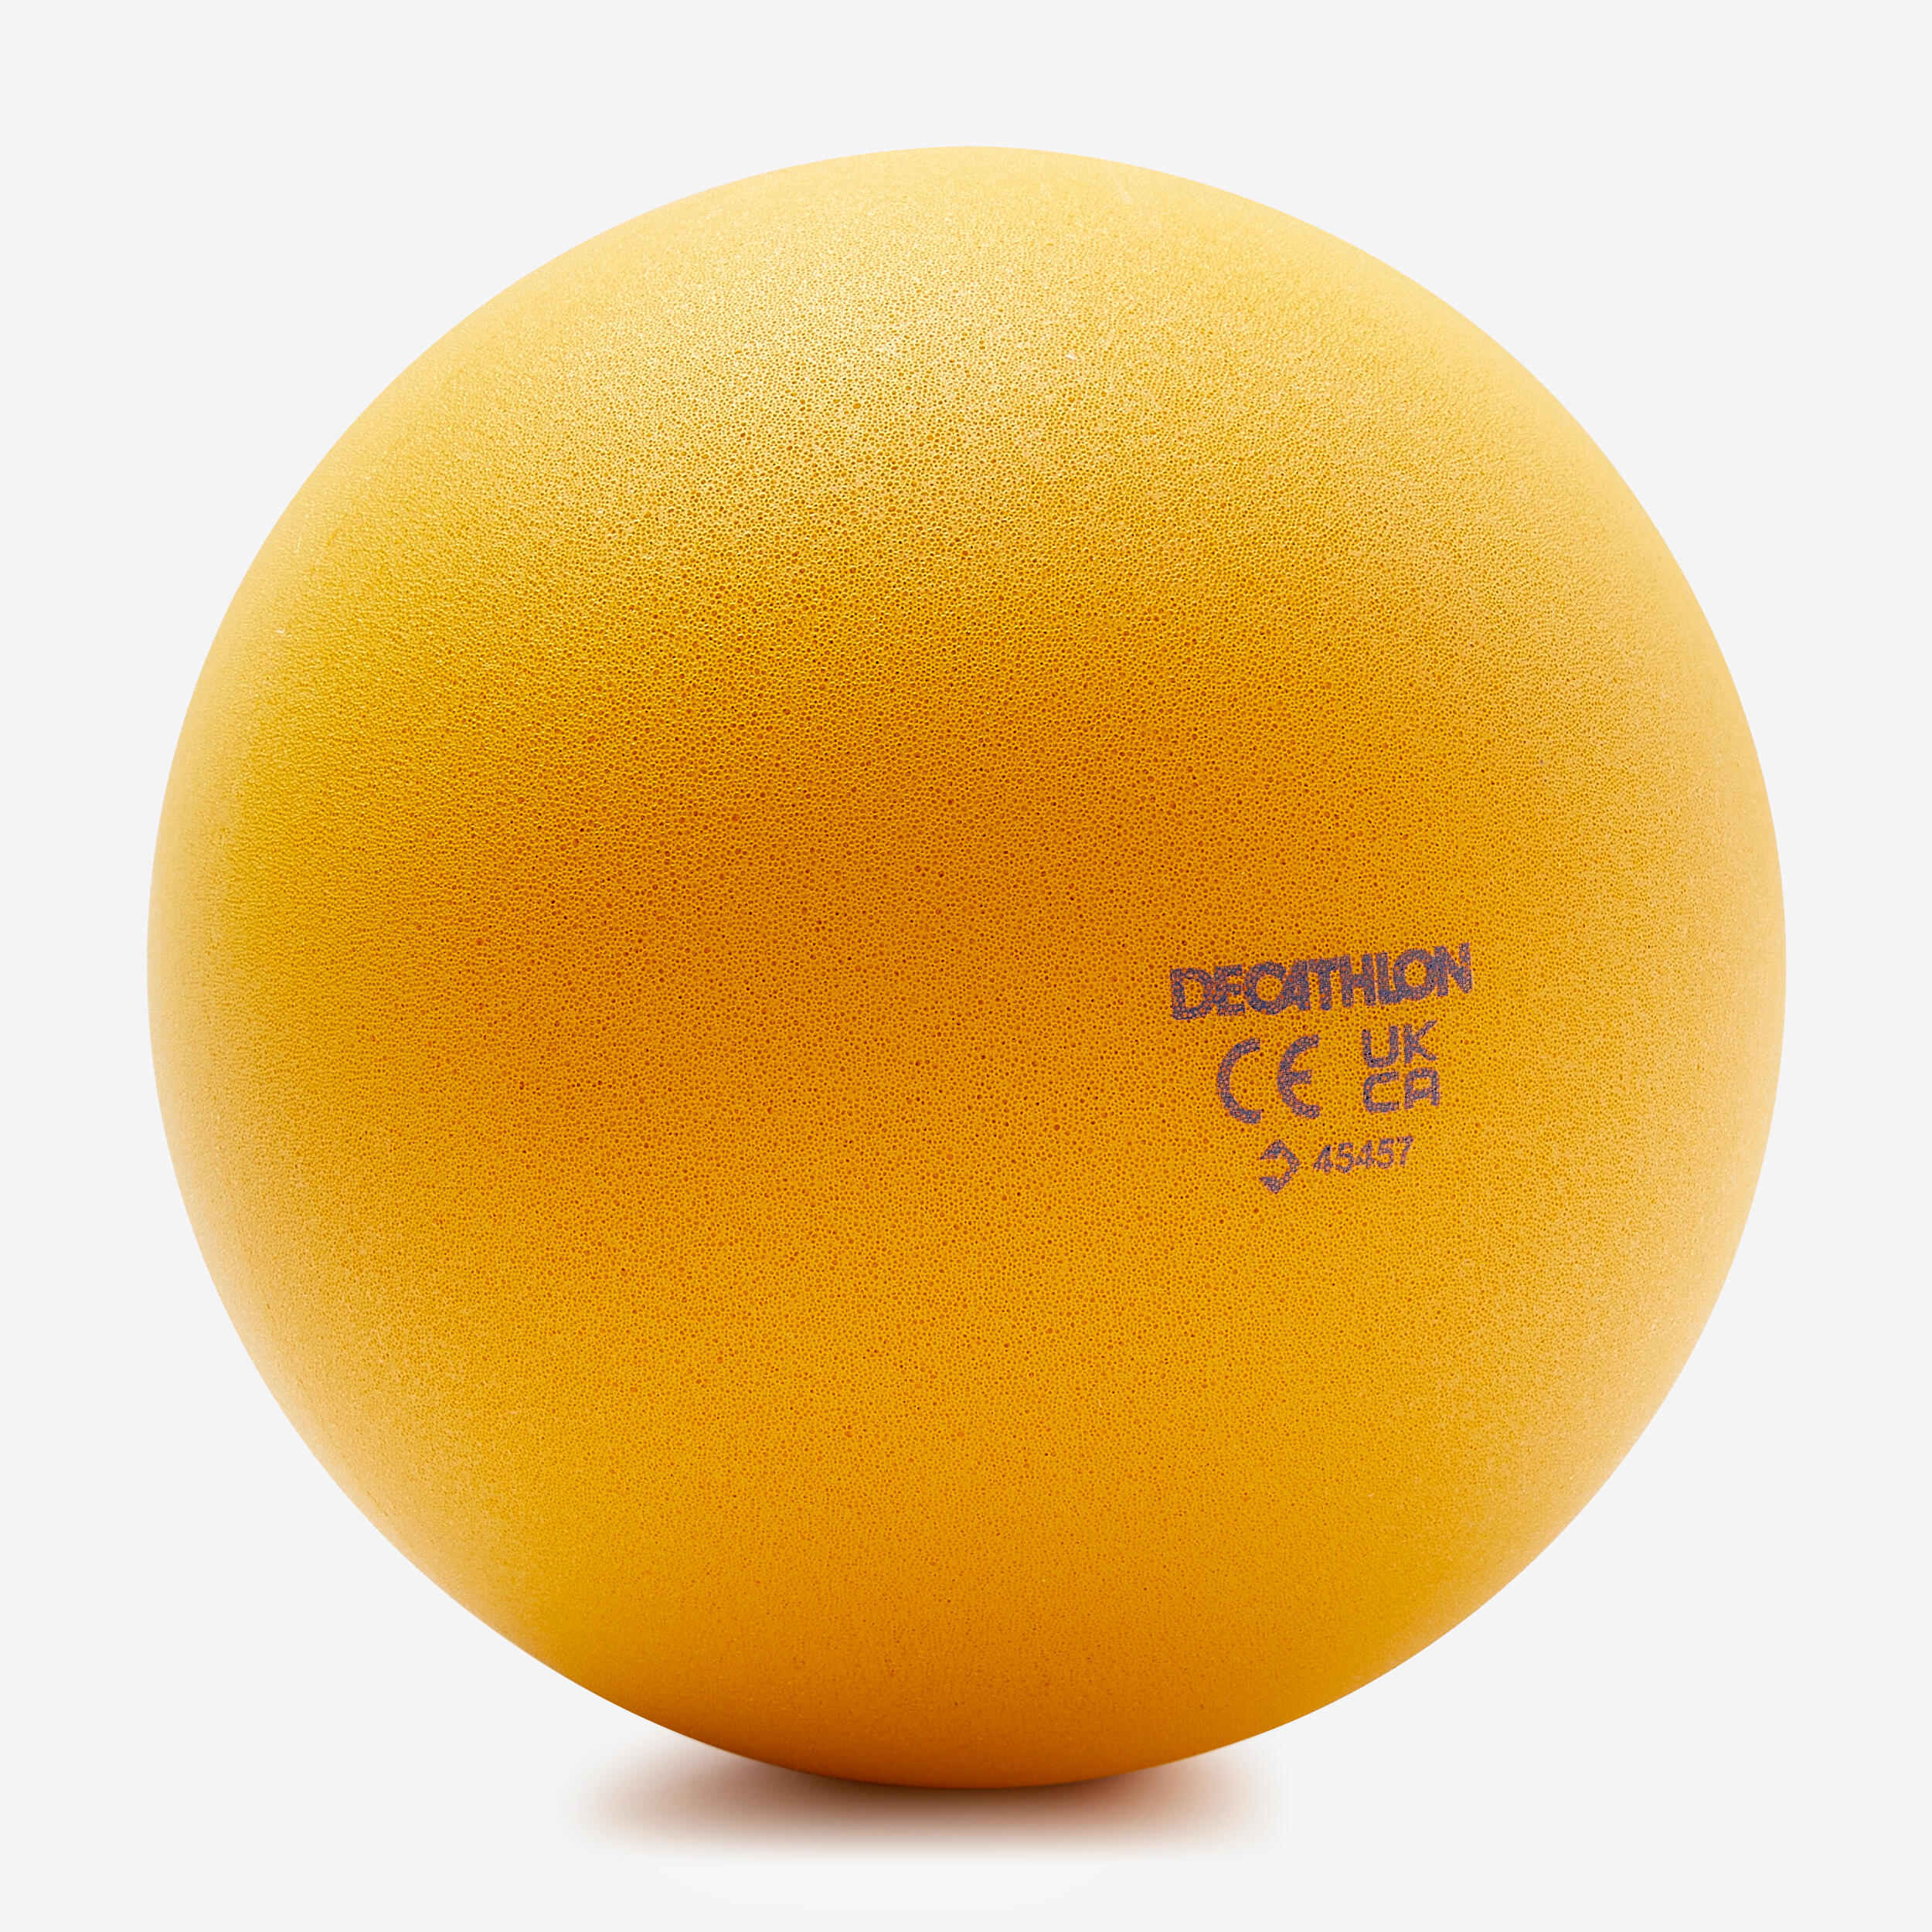 DECATHLON Foam Ball - Yellow